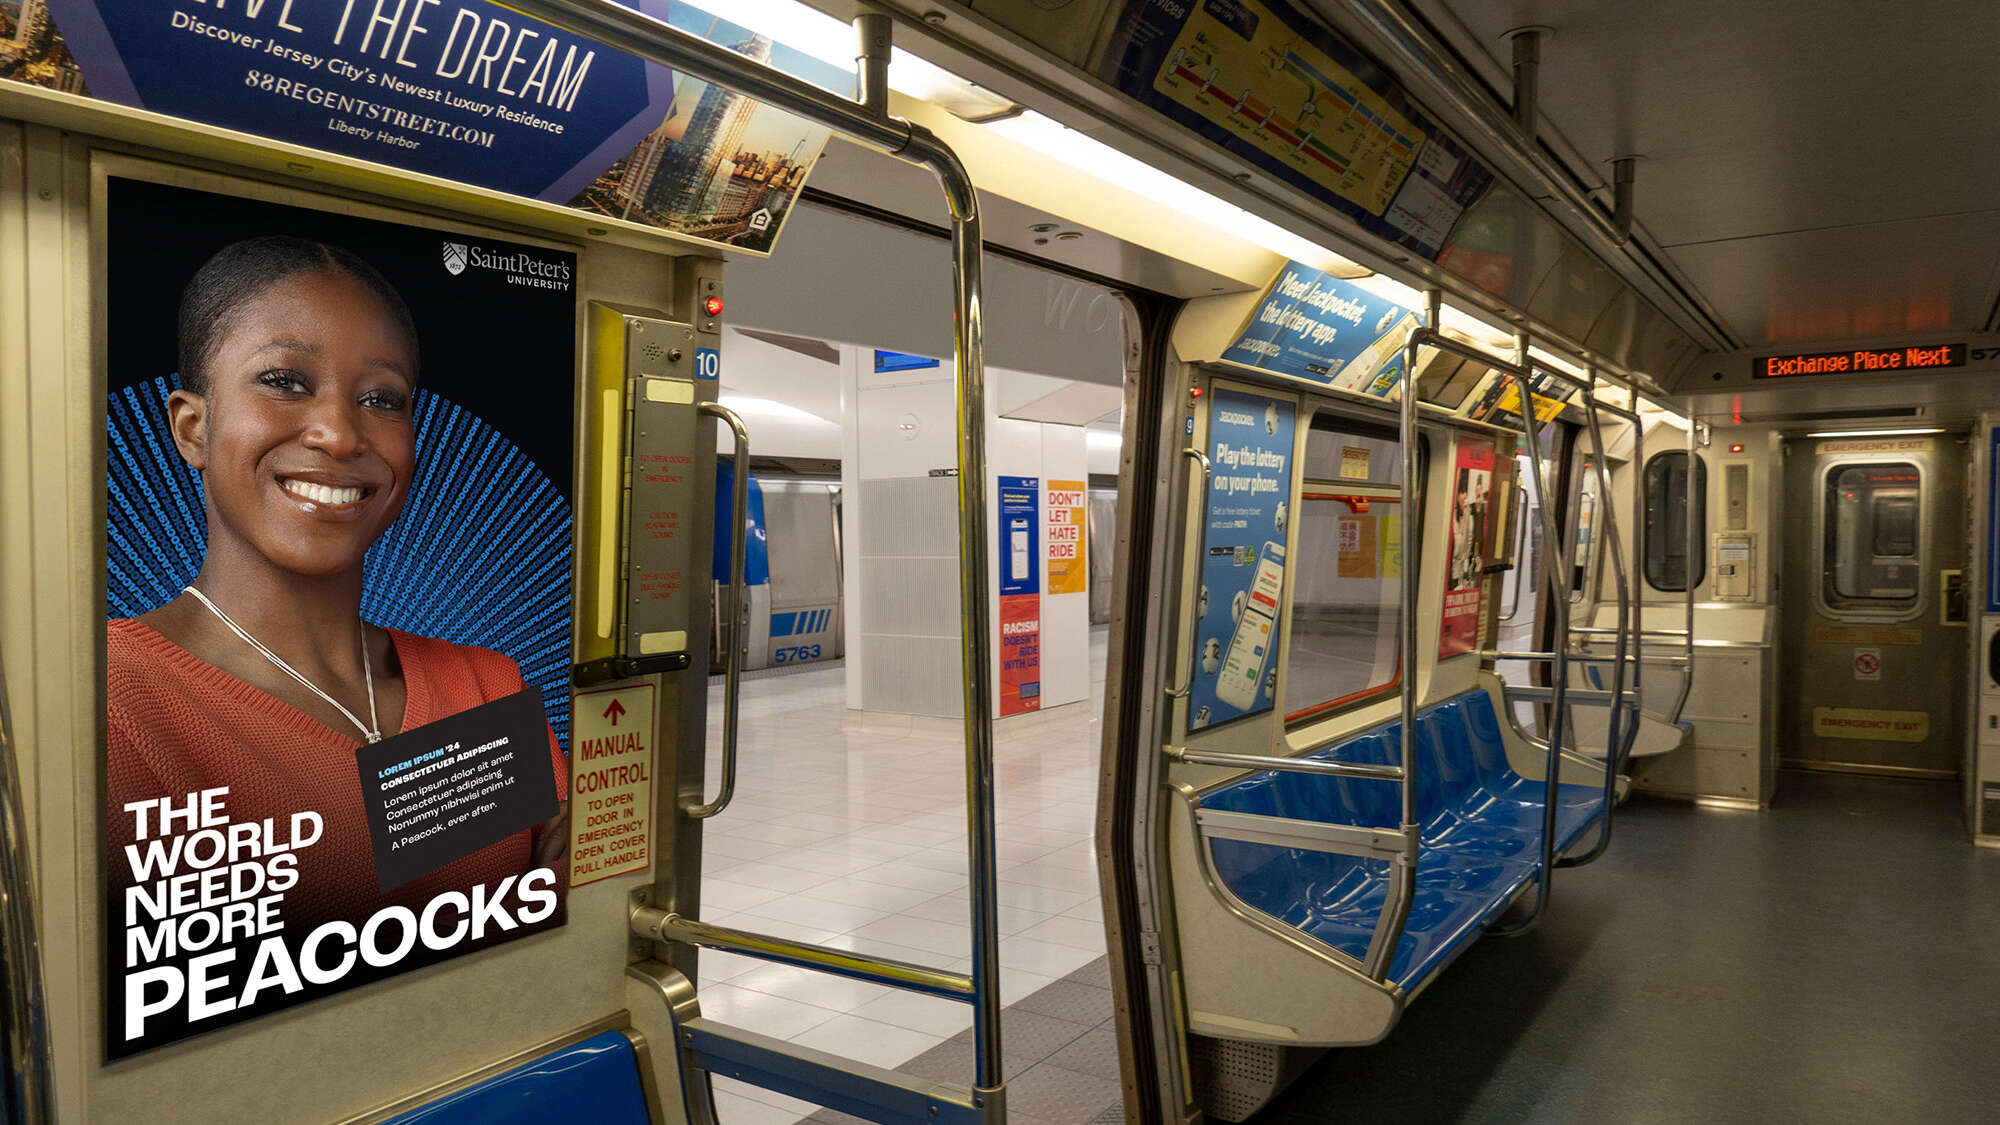 Subway car with Peacocks ad